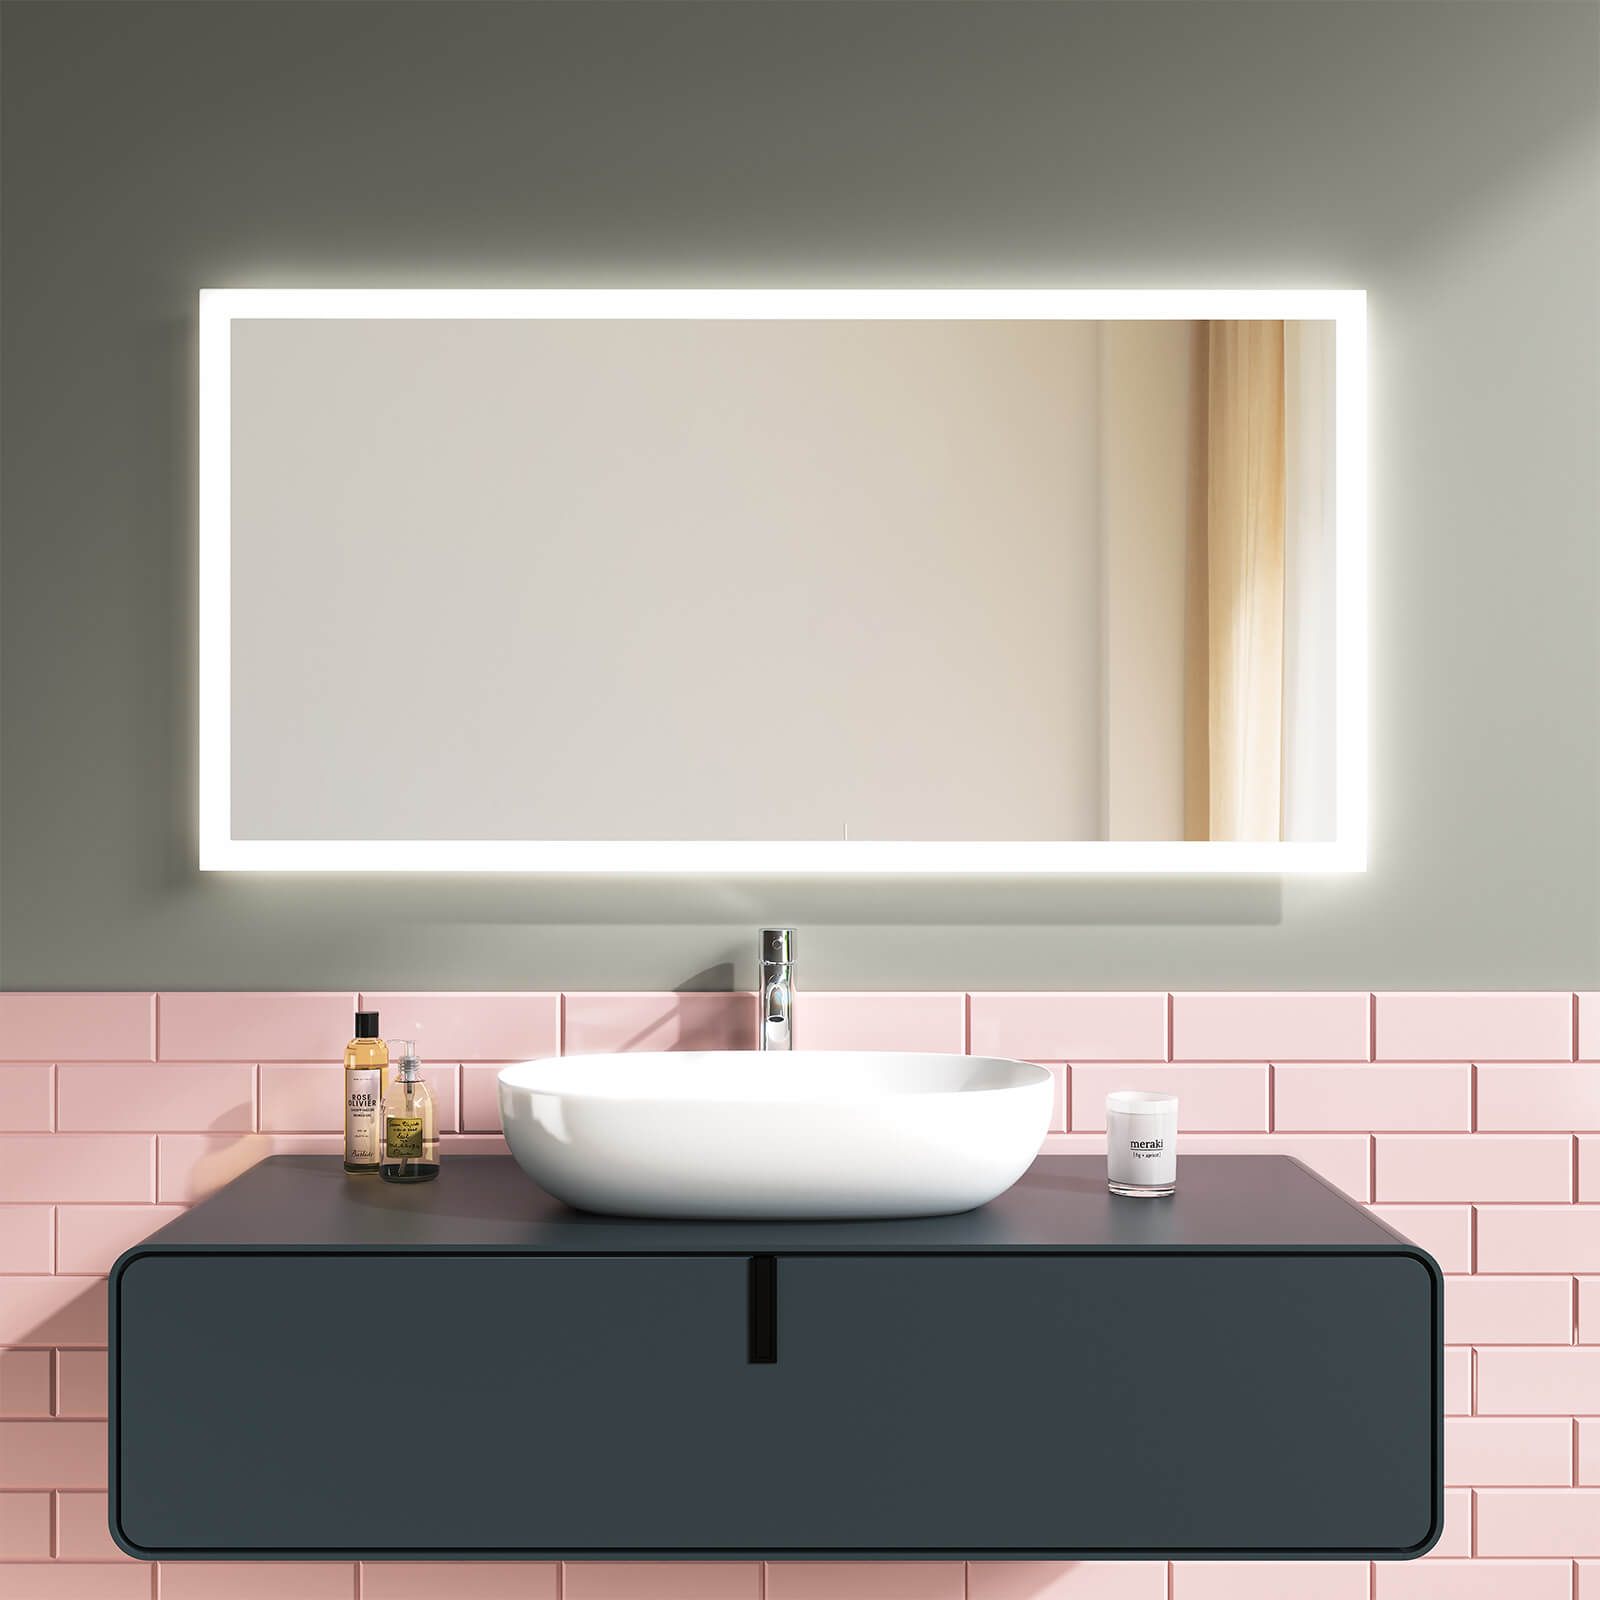 Miroir LED Rectangulaire Mural Lumineux avec Interrupteur 60x 65 cm